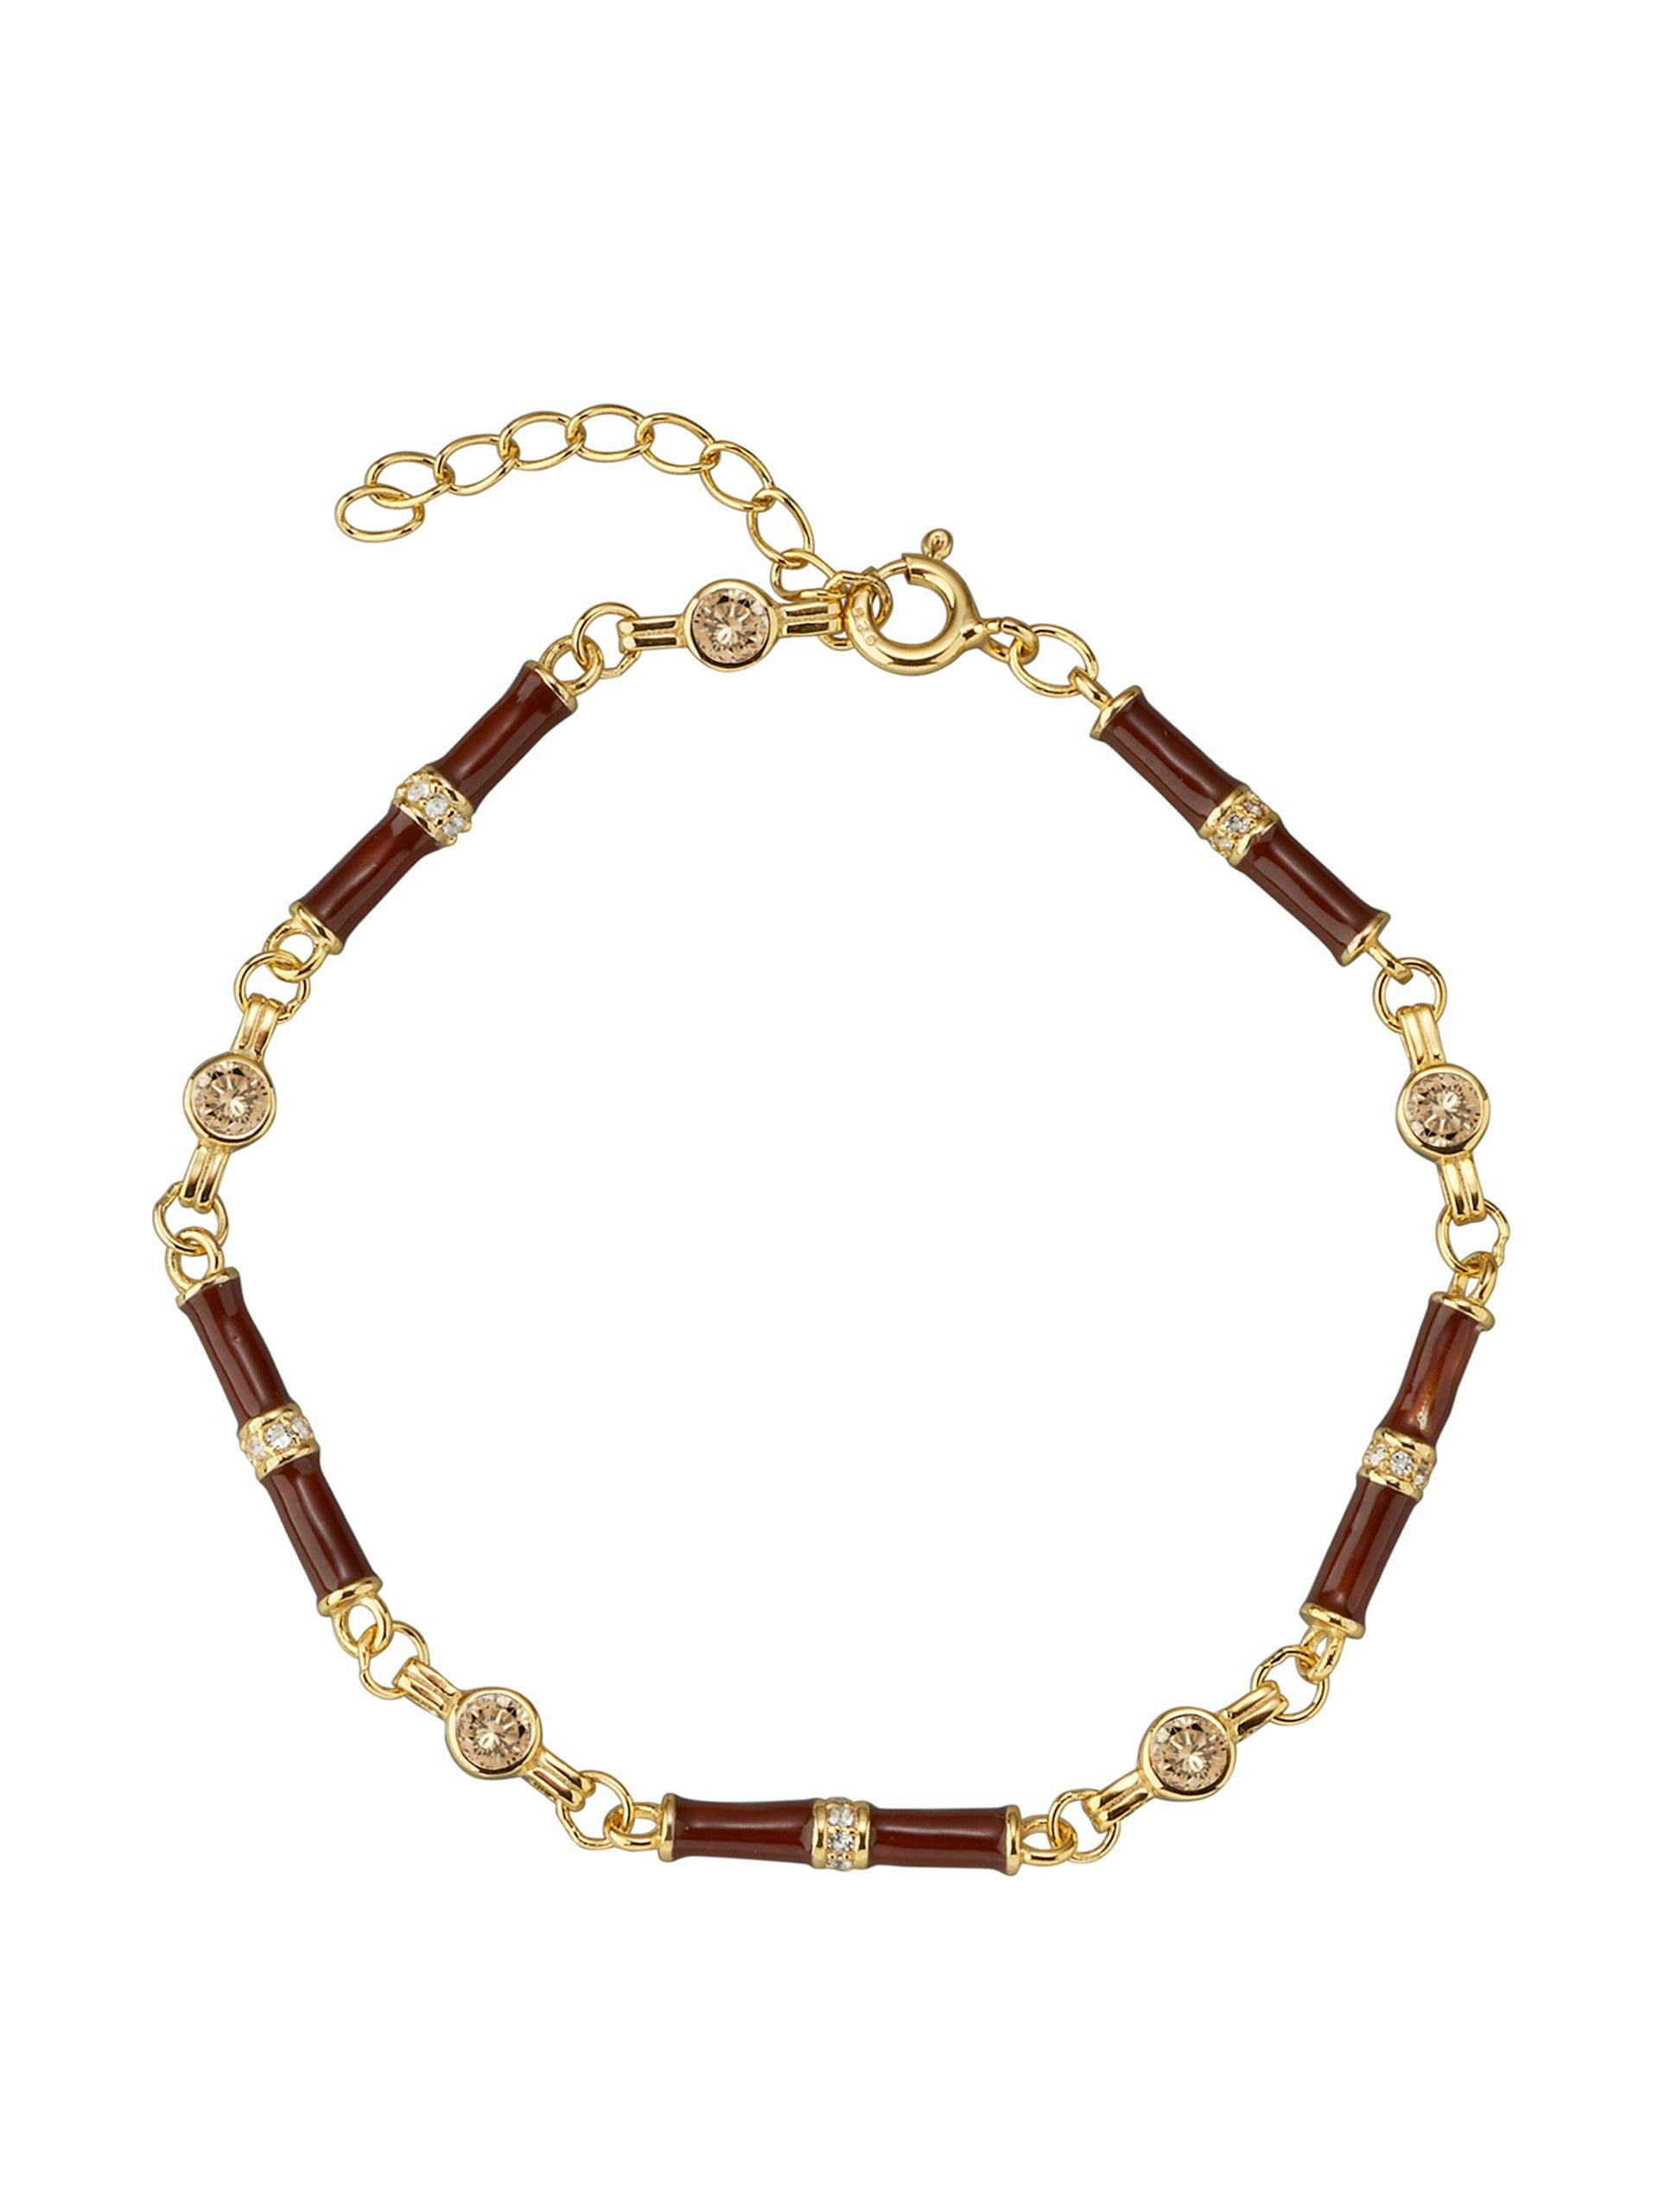 Marlowe brown enamel bracelet with champagne stone